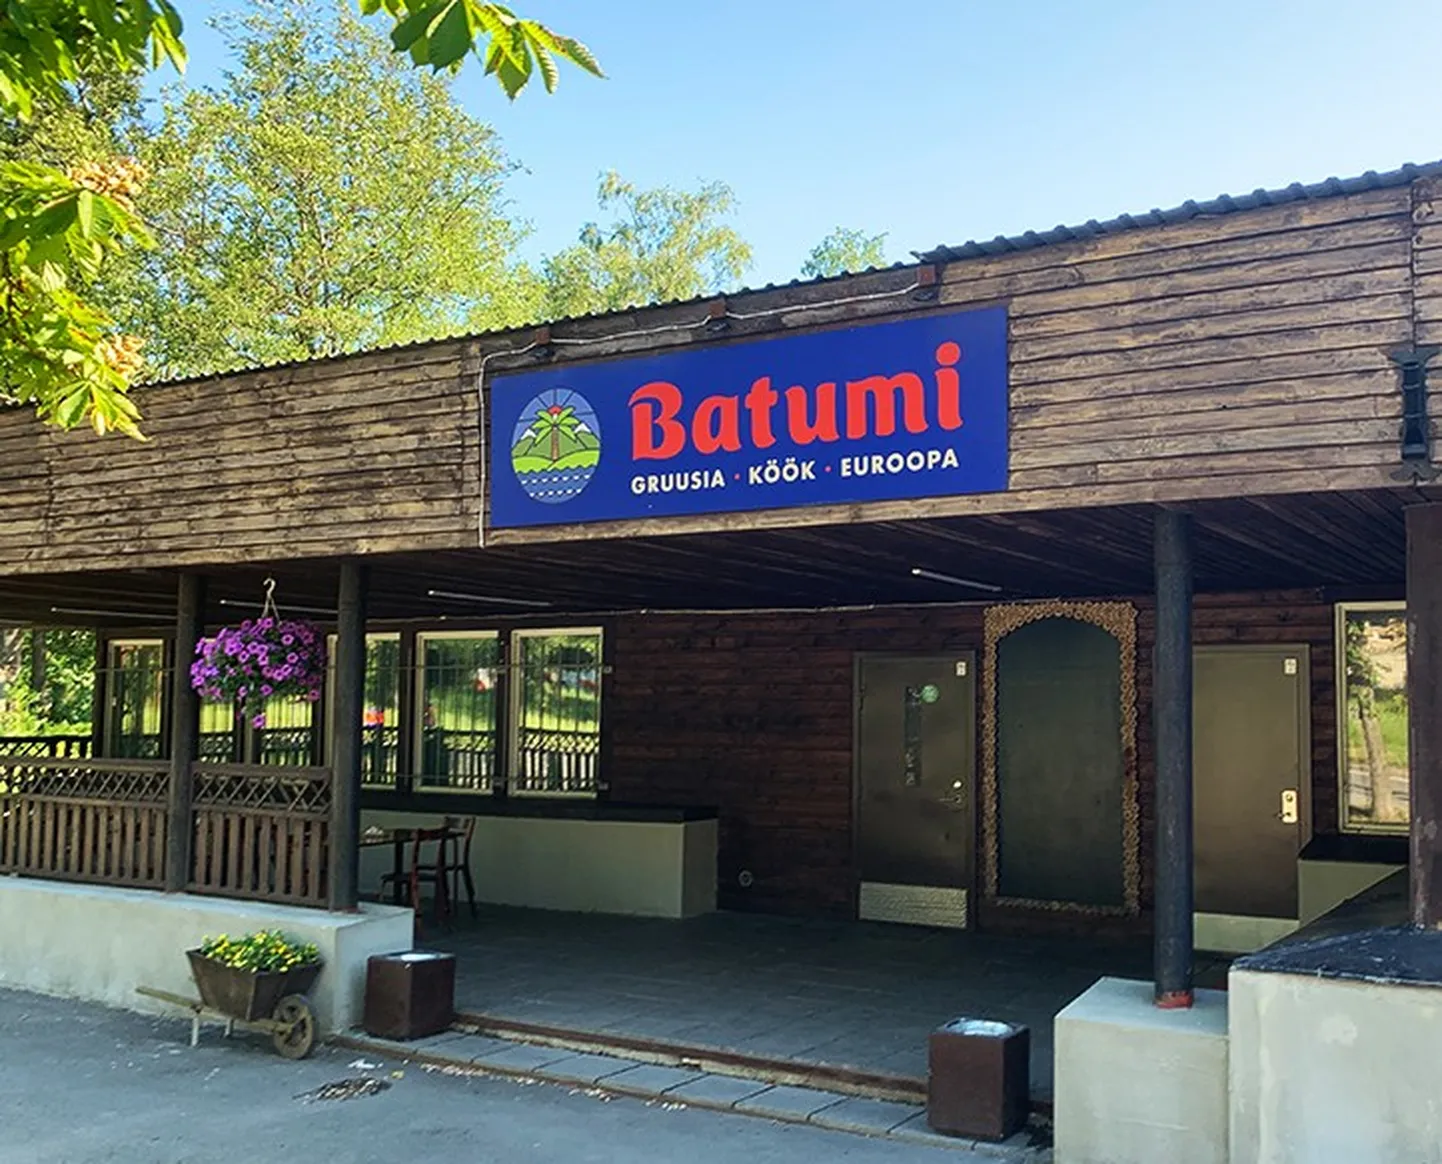 Ресторан «Батуми» на улице Копли в Таллинне.